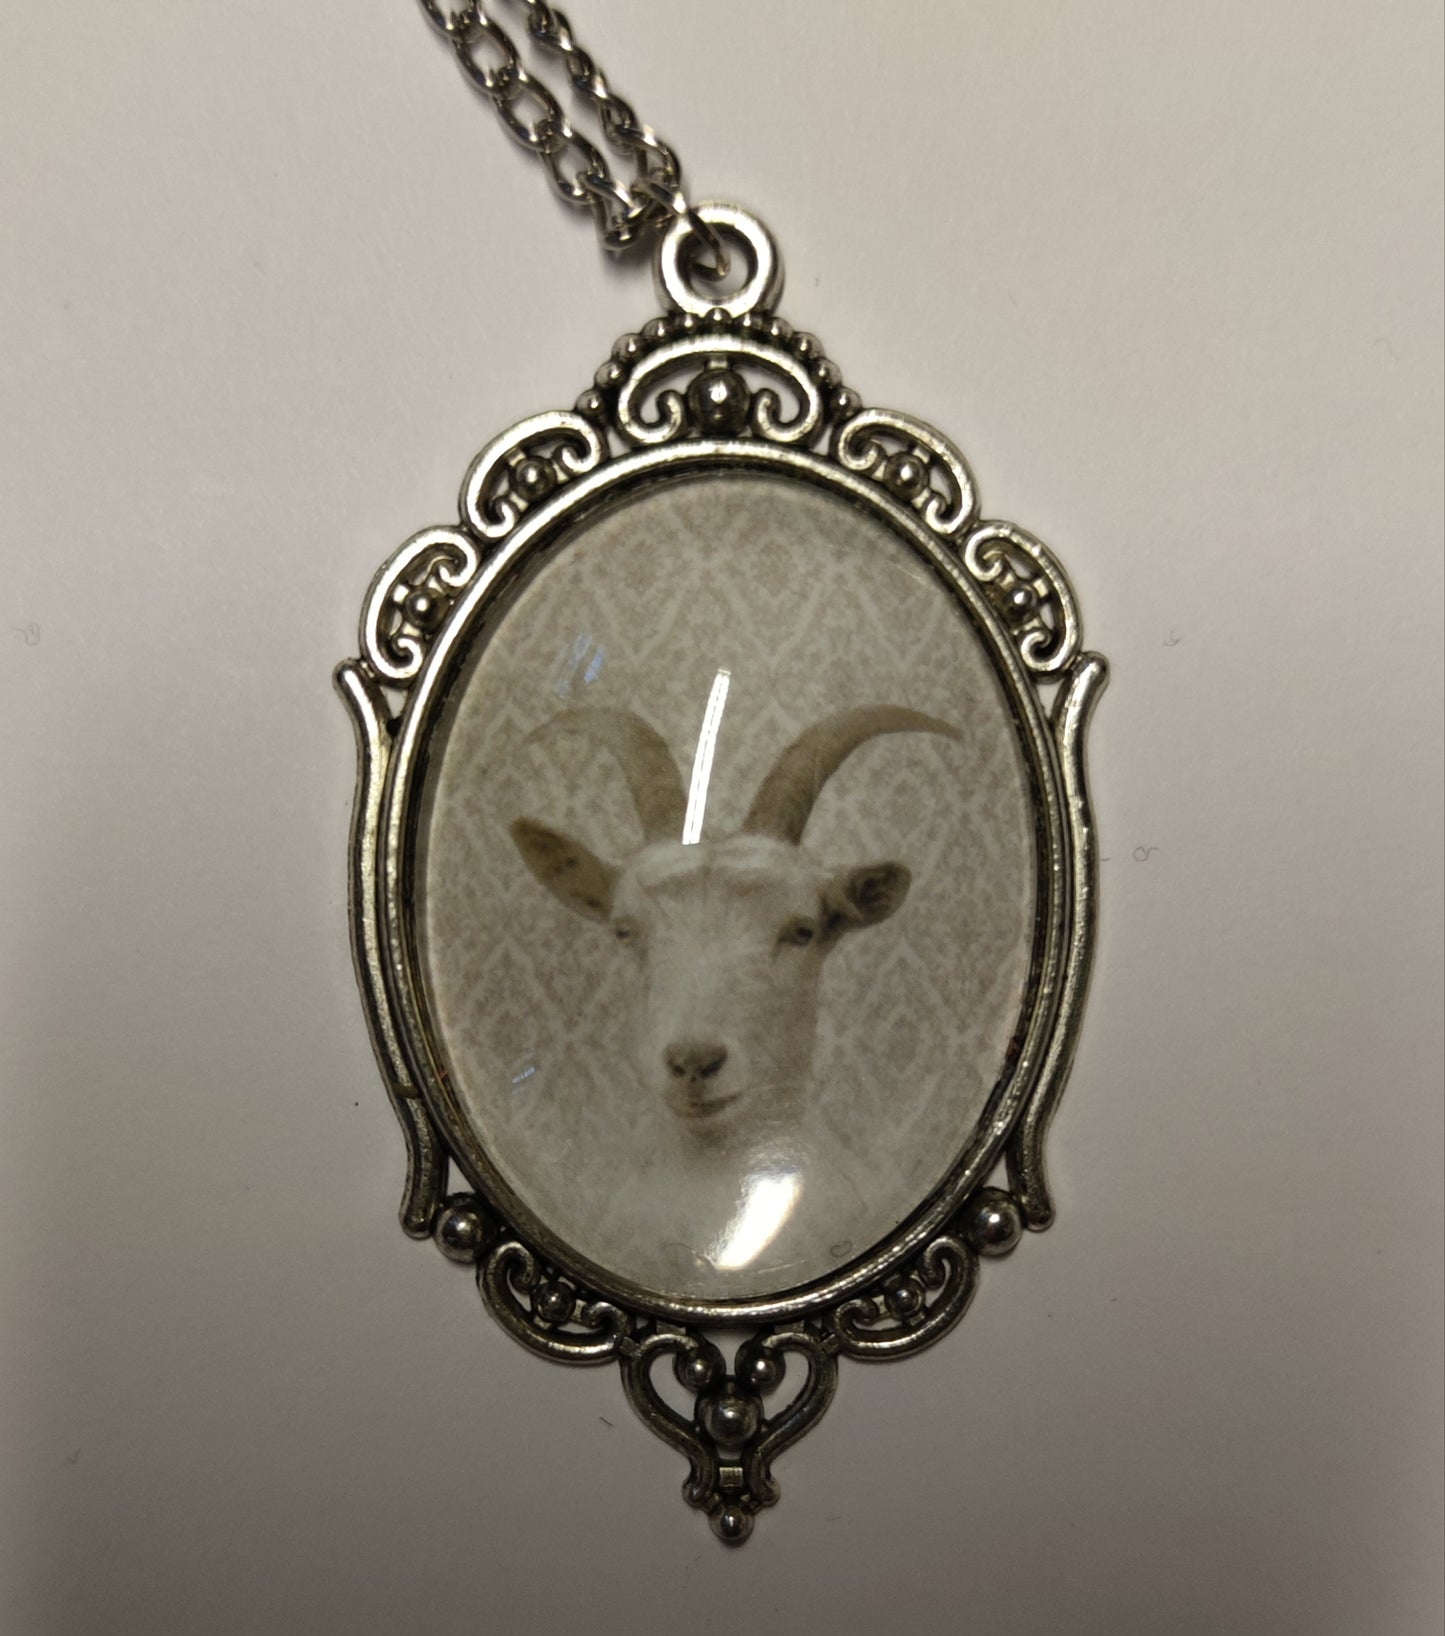 Goat halsband silver colour by Yoara Design